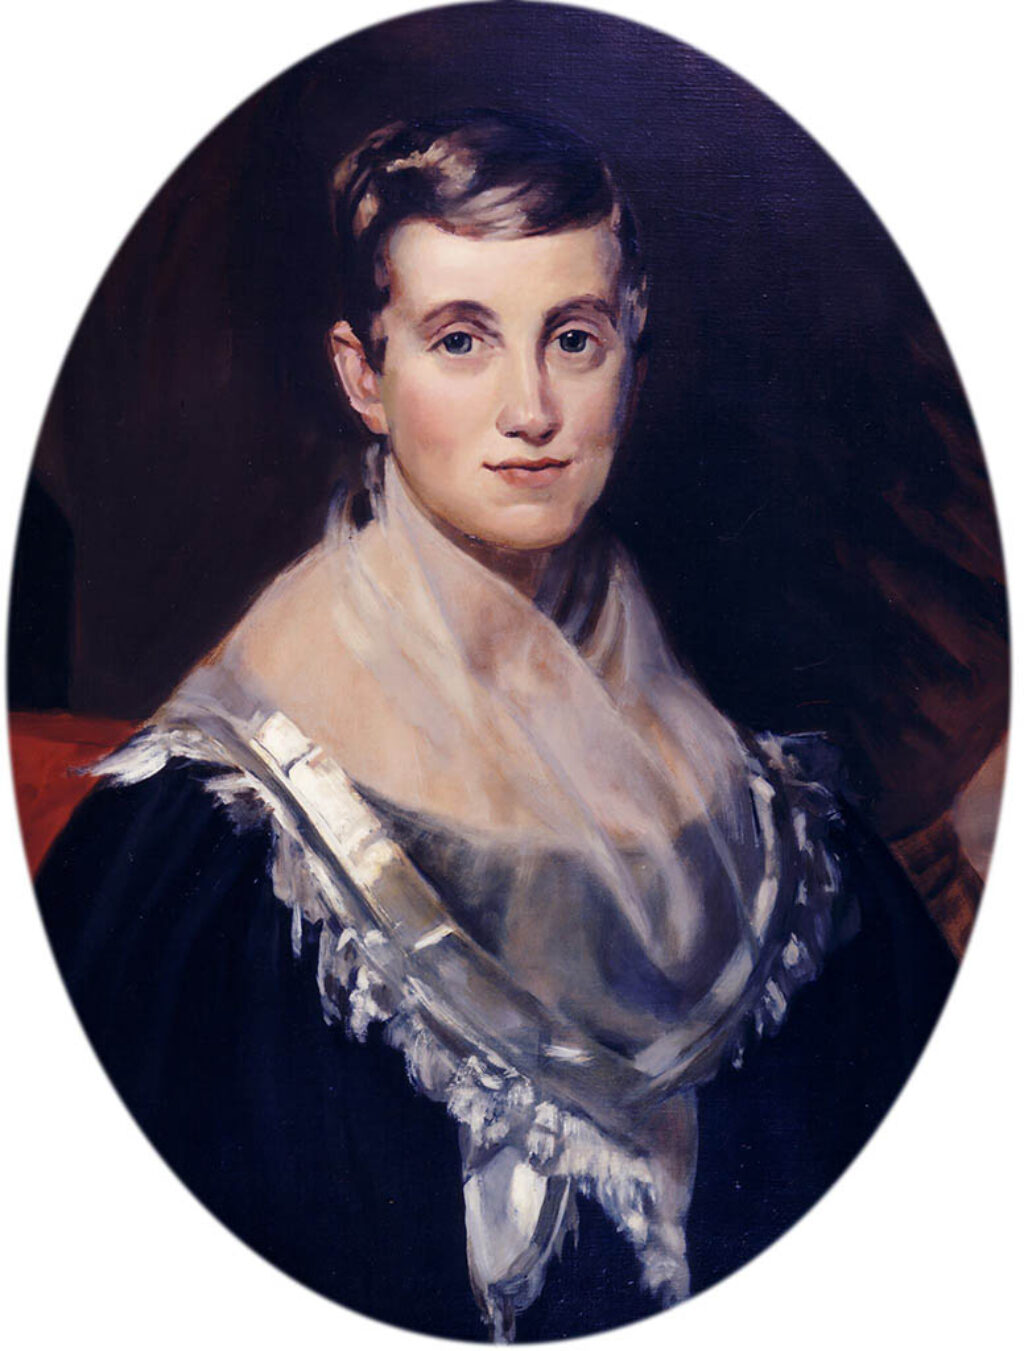 Prudence Crandall (Rhode Island, 1803 - Kansas, 1890), maestra y activista estadounidense.